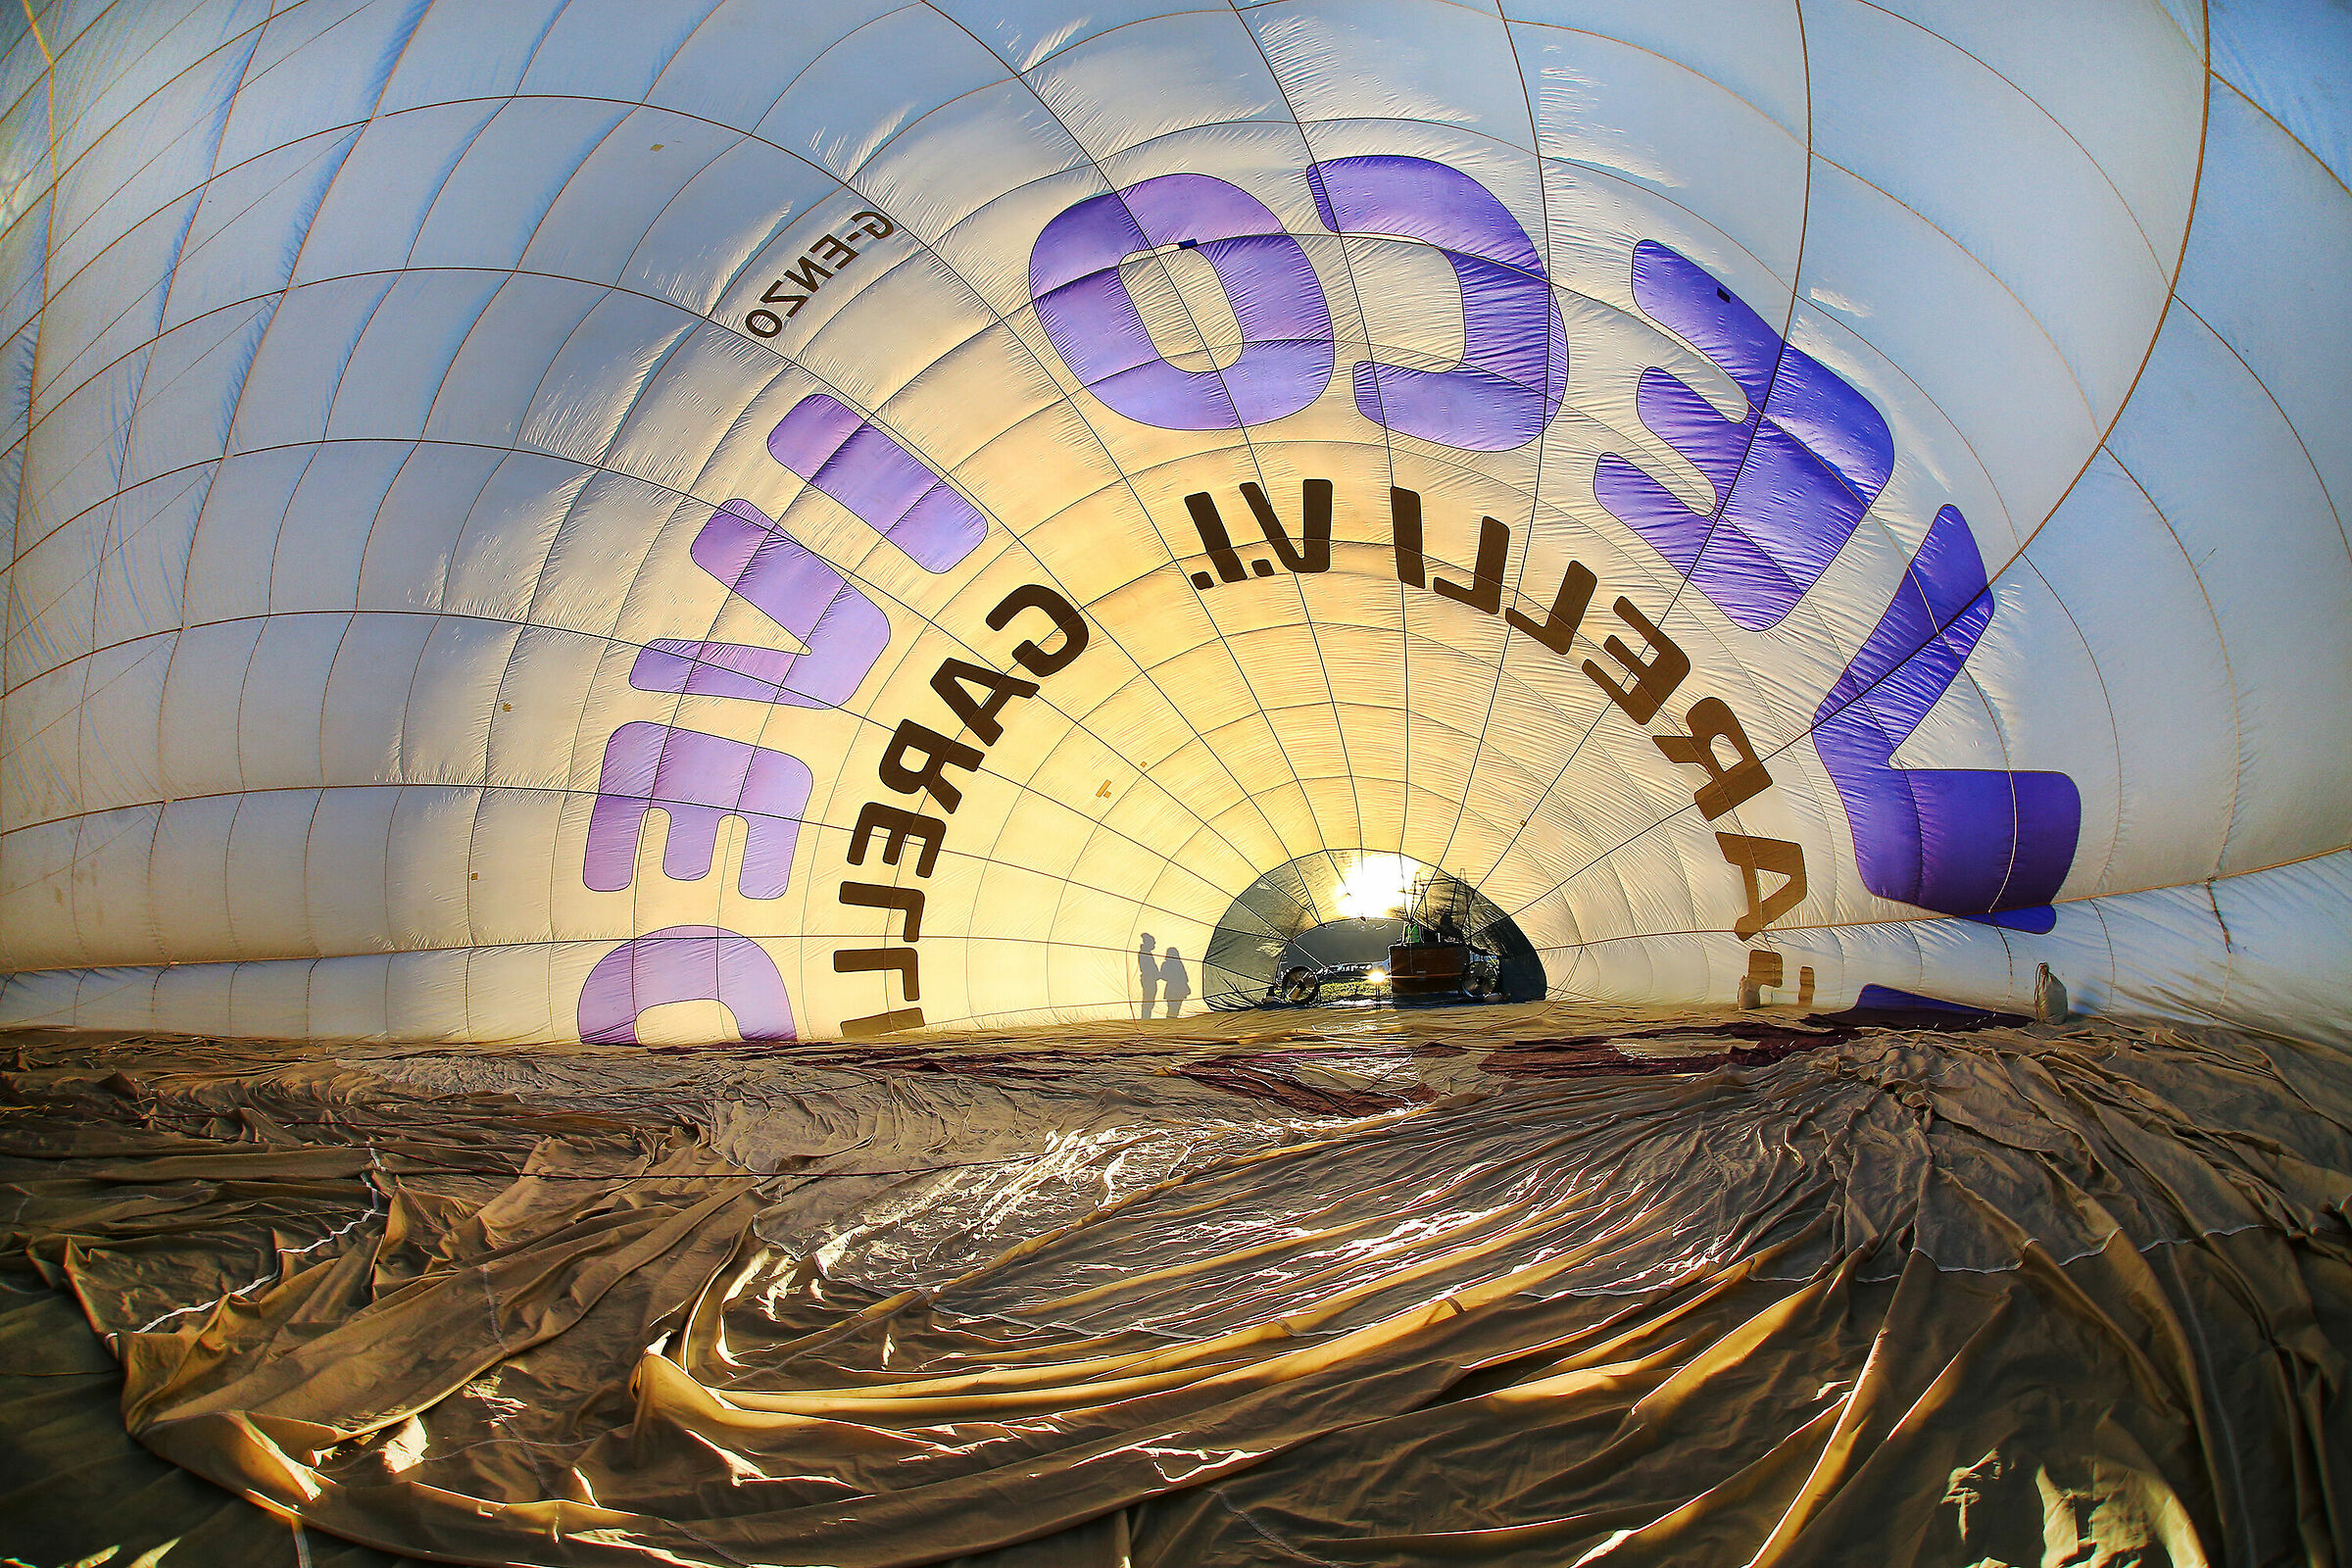 Inside The Balloon...